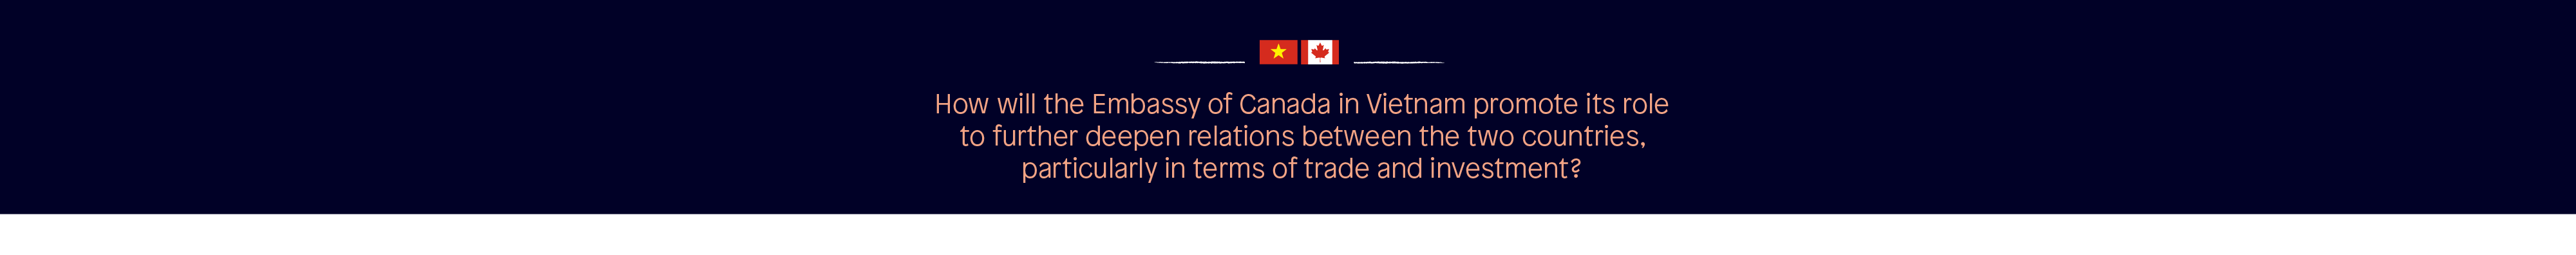 Vietnam & Canada enhancing engagement - Ảnh 7